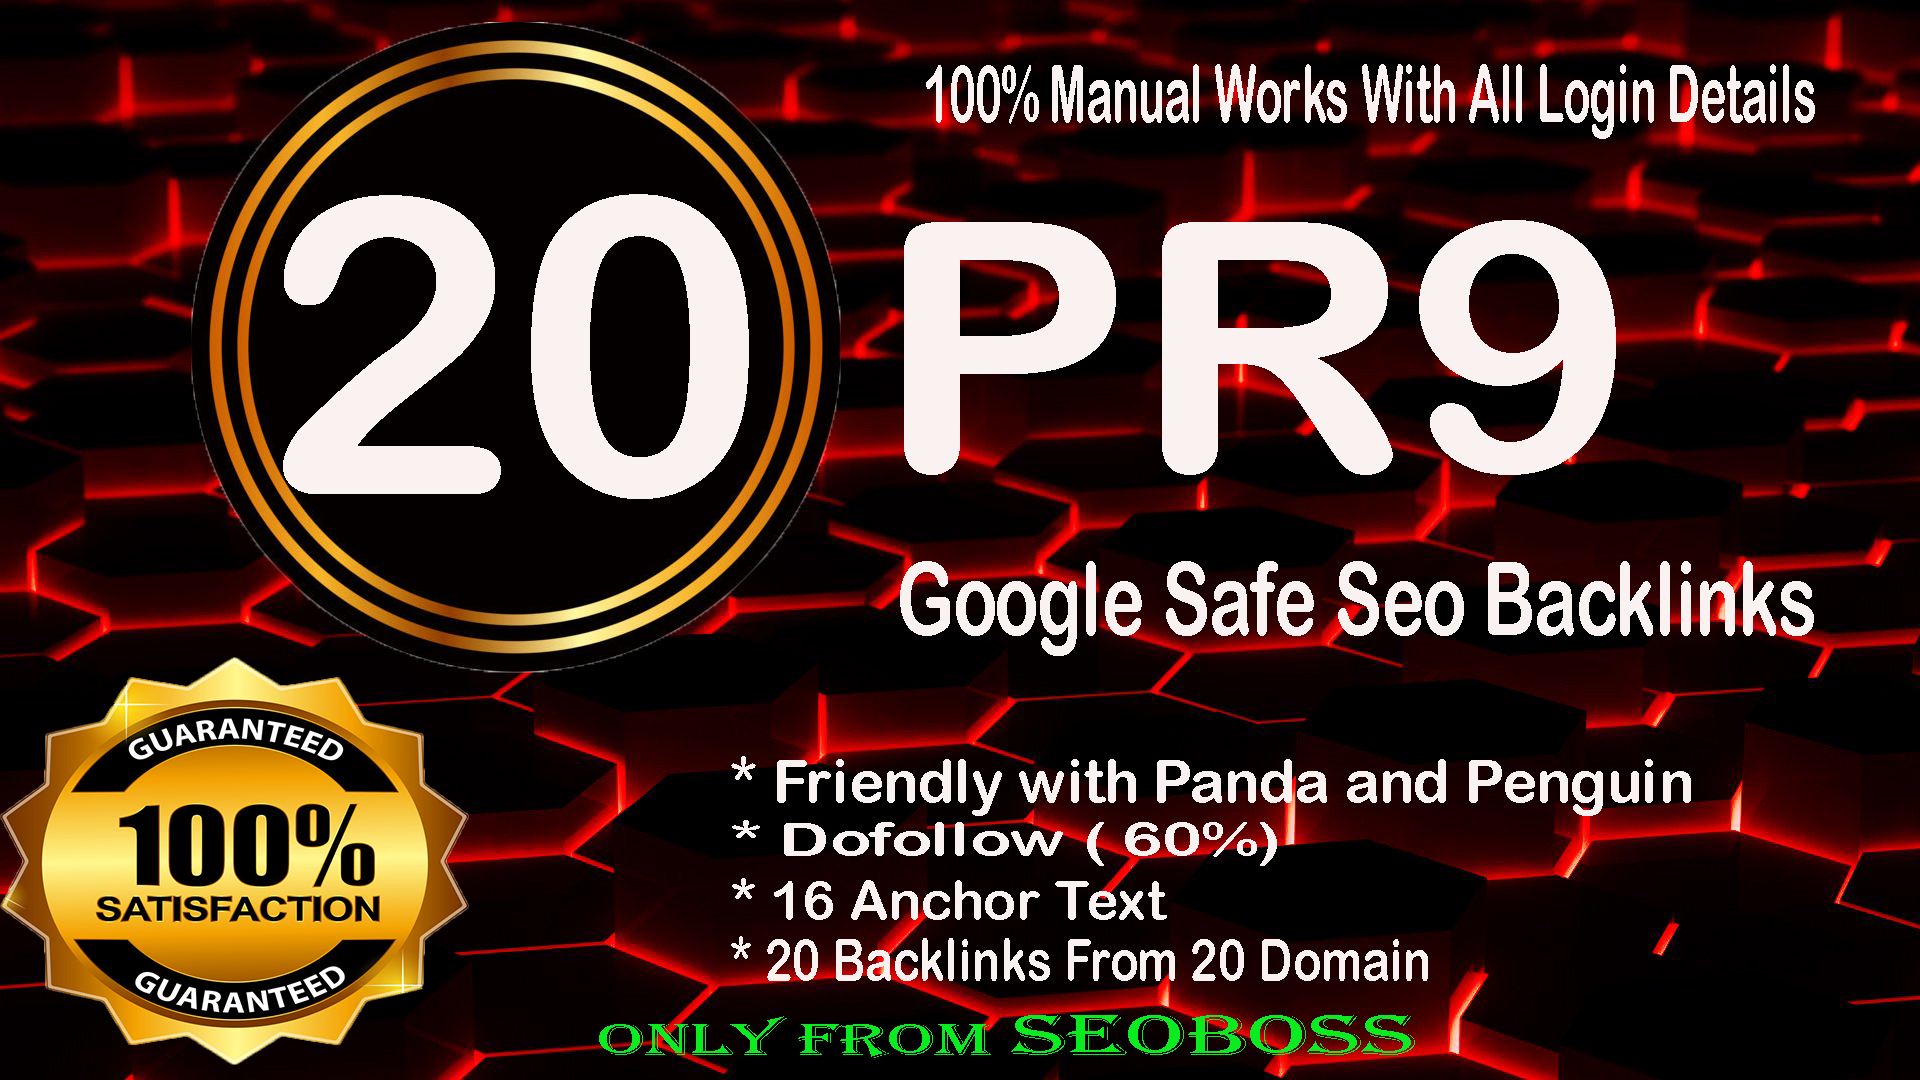 20 Pr9 - 80+ DA High Quality SEO Domain Authority Permanent Backlinks